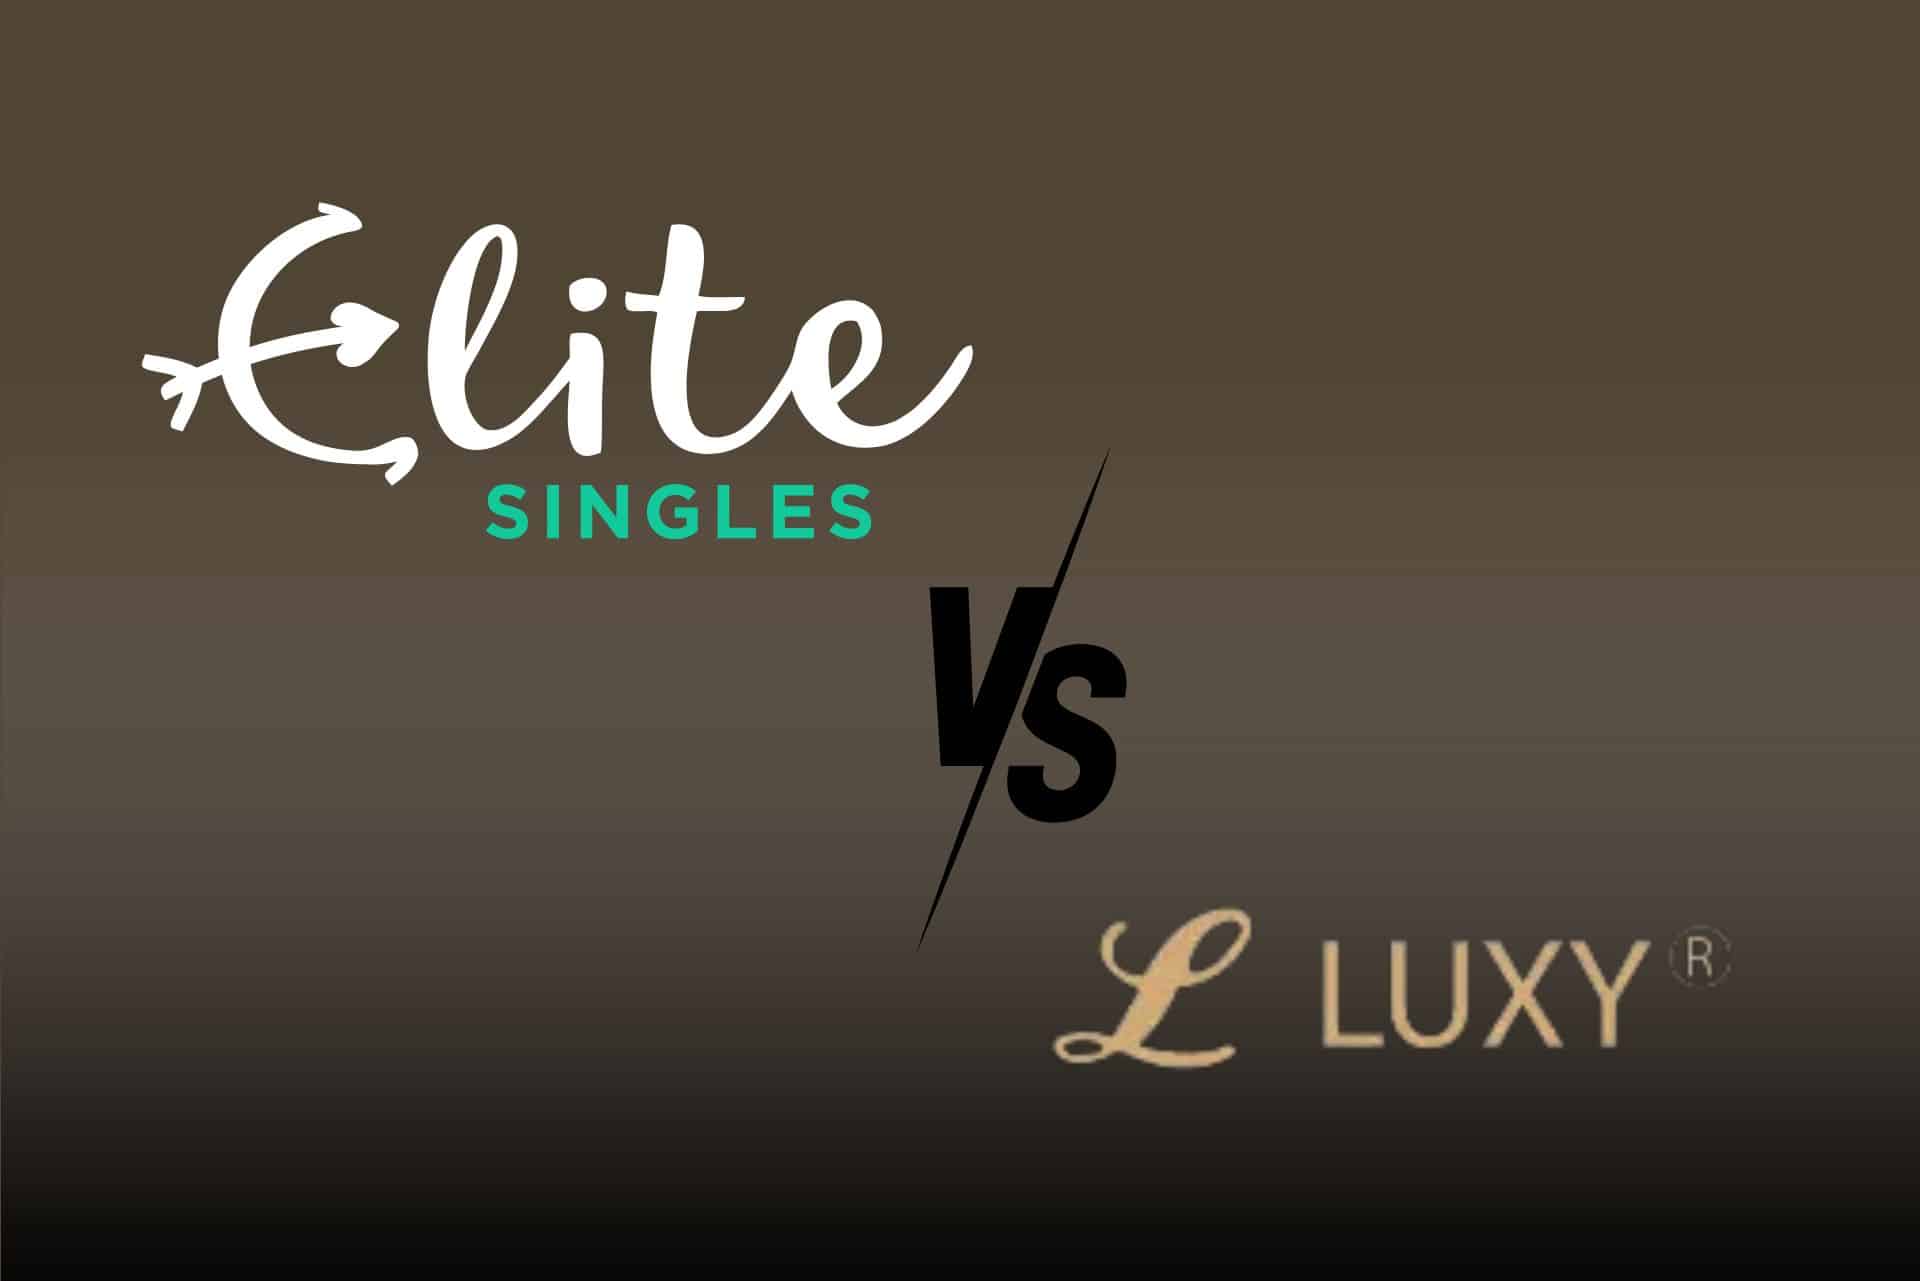 EliteSingles Vs Luxy - Comparing Dating Sites